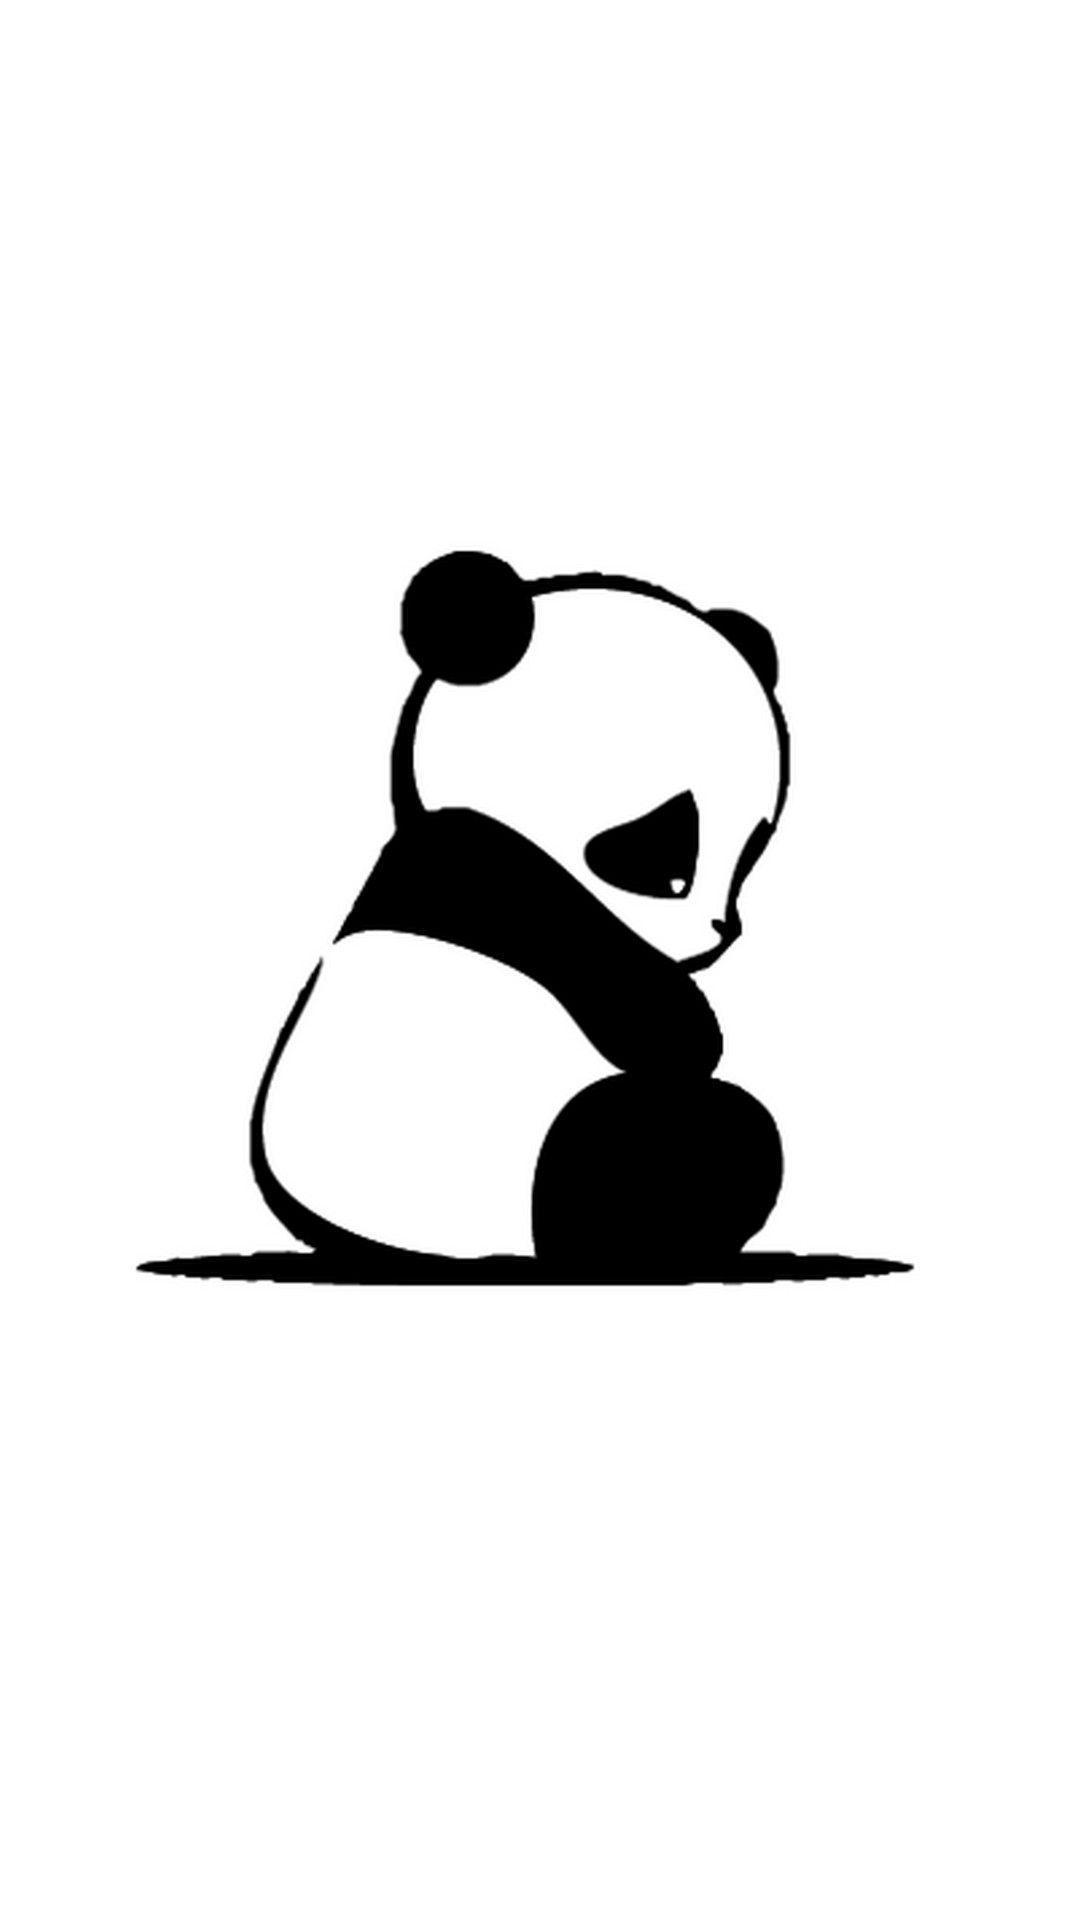 Cute Baby Panda Wallpaper For Mobile. Best HD Wallpaper. Cute panda wallpaper, Panda drawing, Panda wallpaper